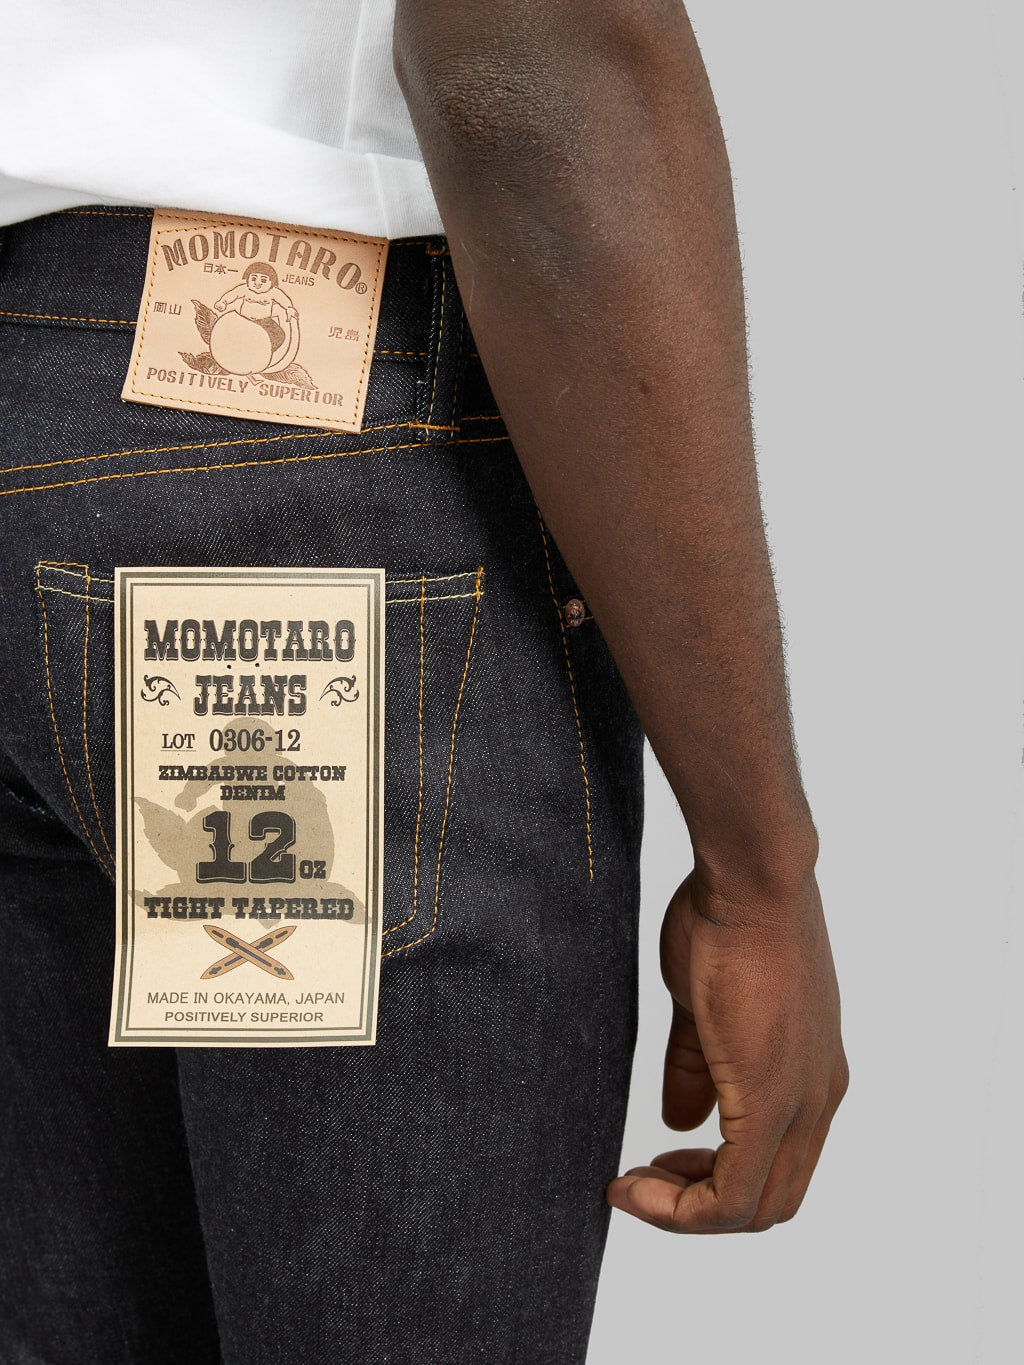 momotaro jeans 0306 12 12oz selvedge denim tight tapered pocket flasher